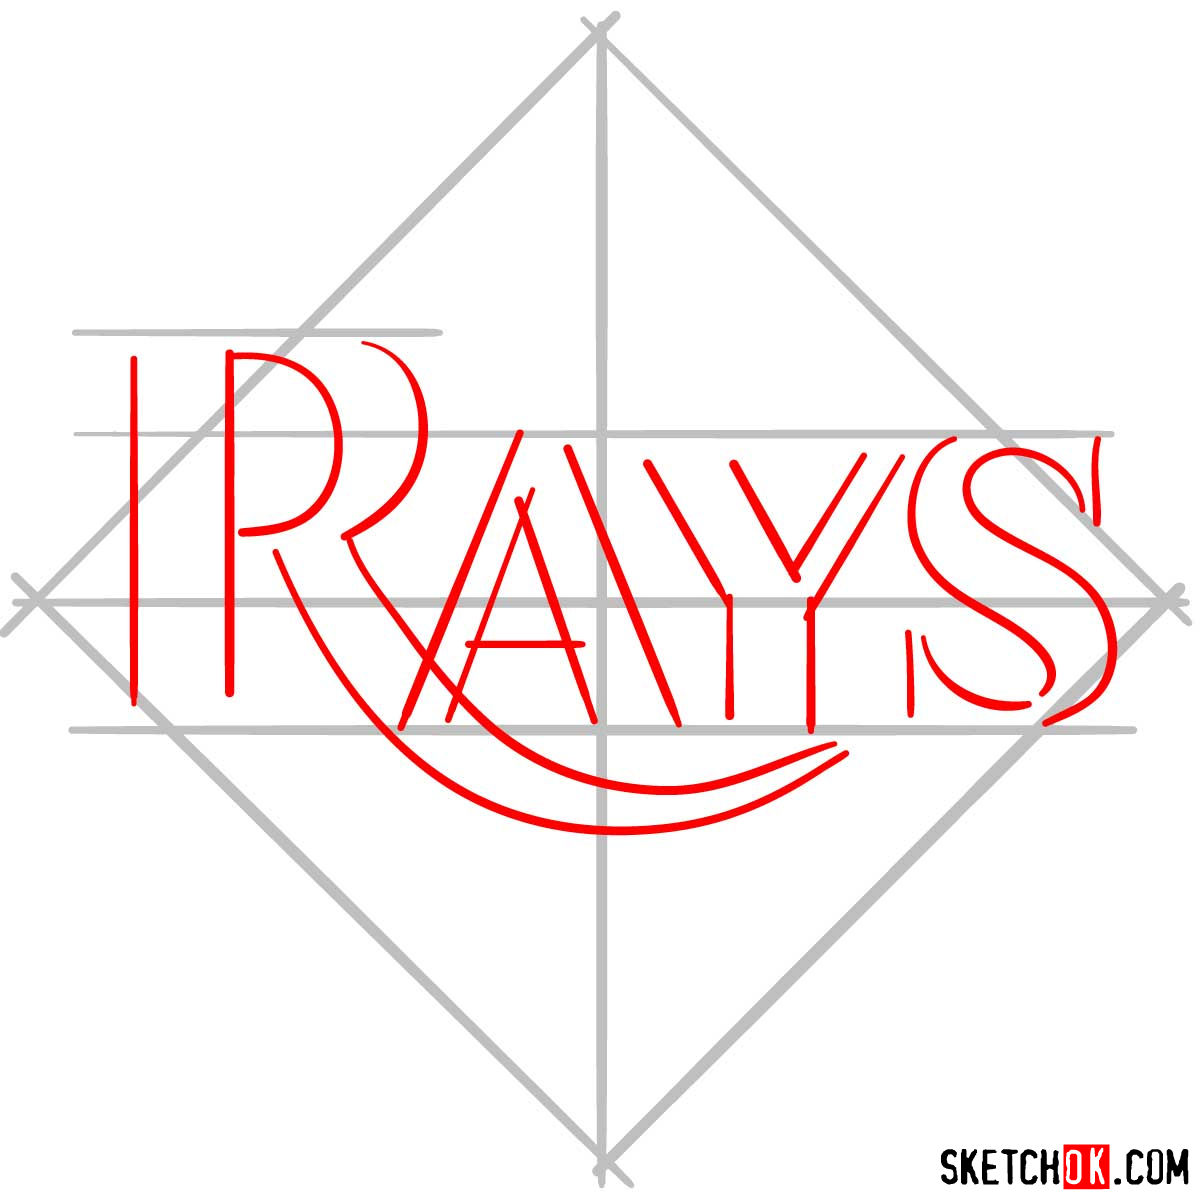 How to draw Tampa Bay Rays logo | MLB logos - step 02